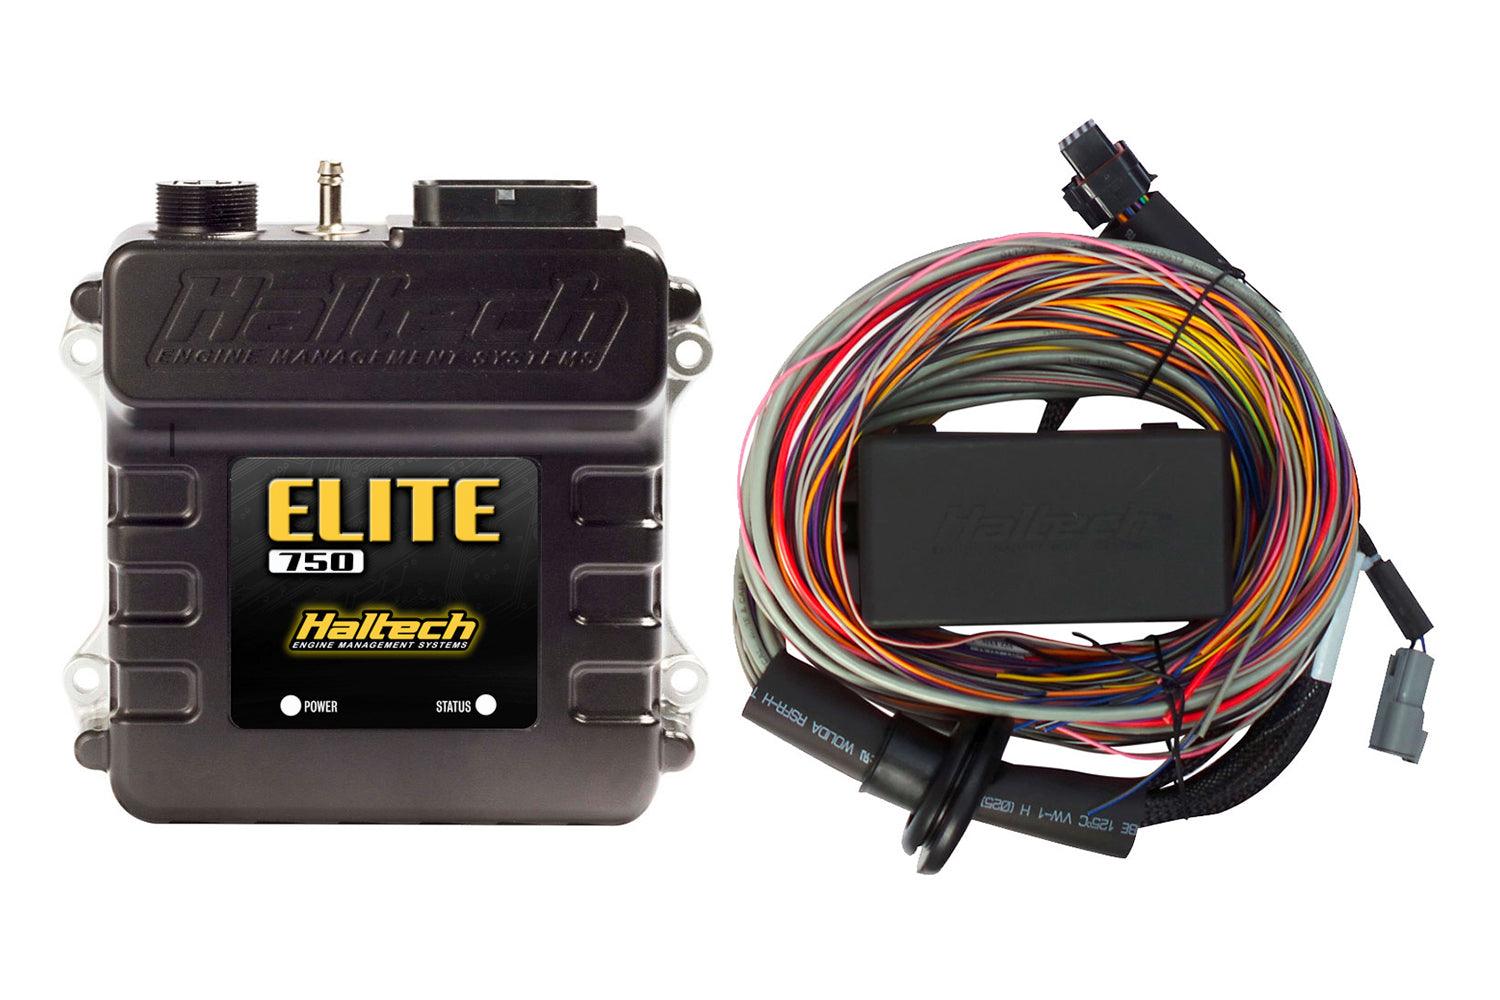 HT-150604 - Elite 750 +Premium Universal Wire-in Harness Kit